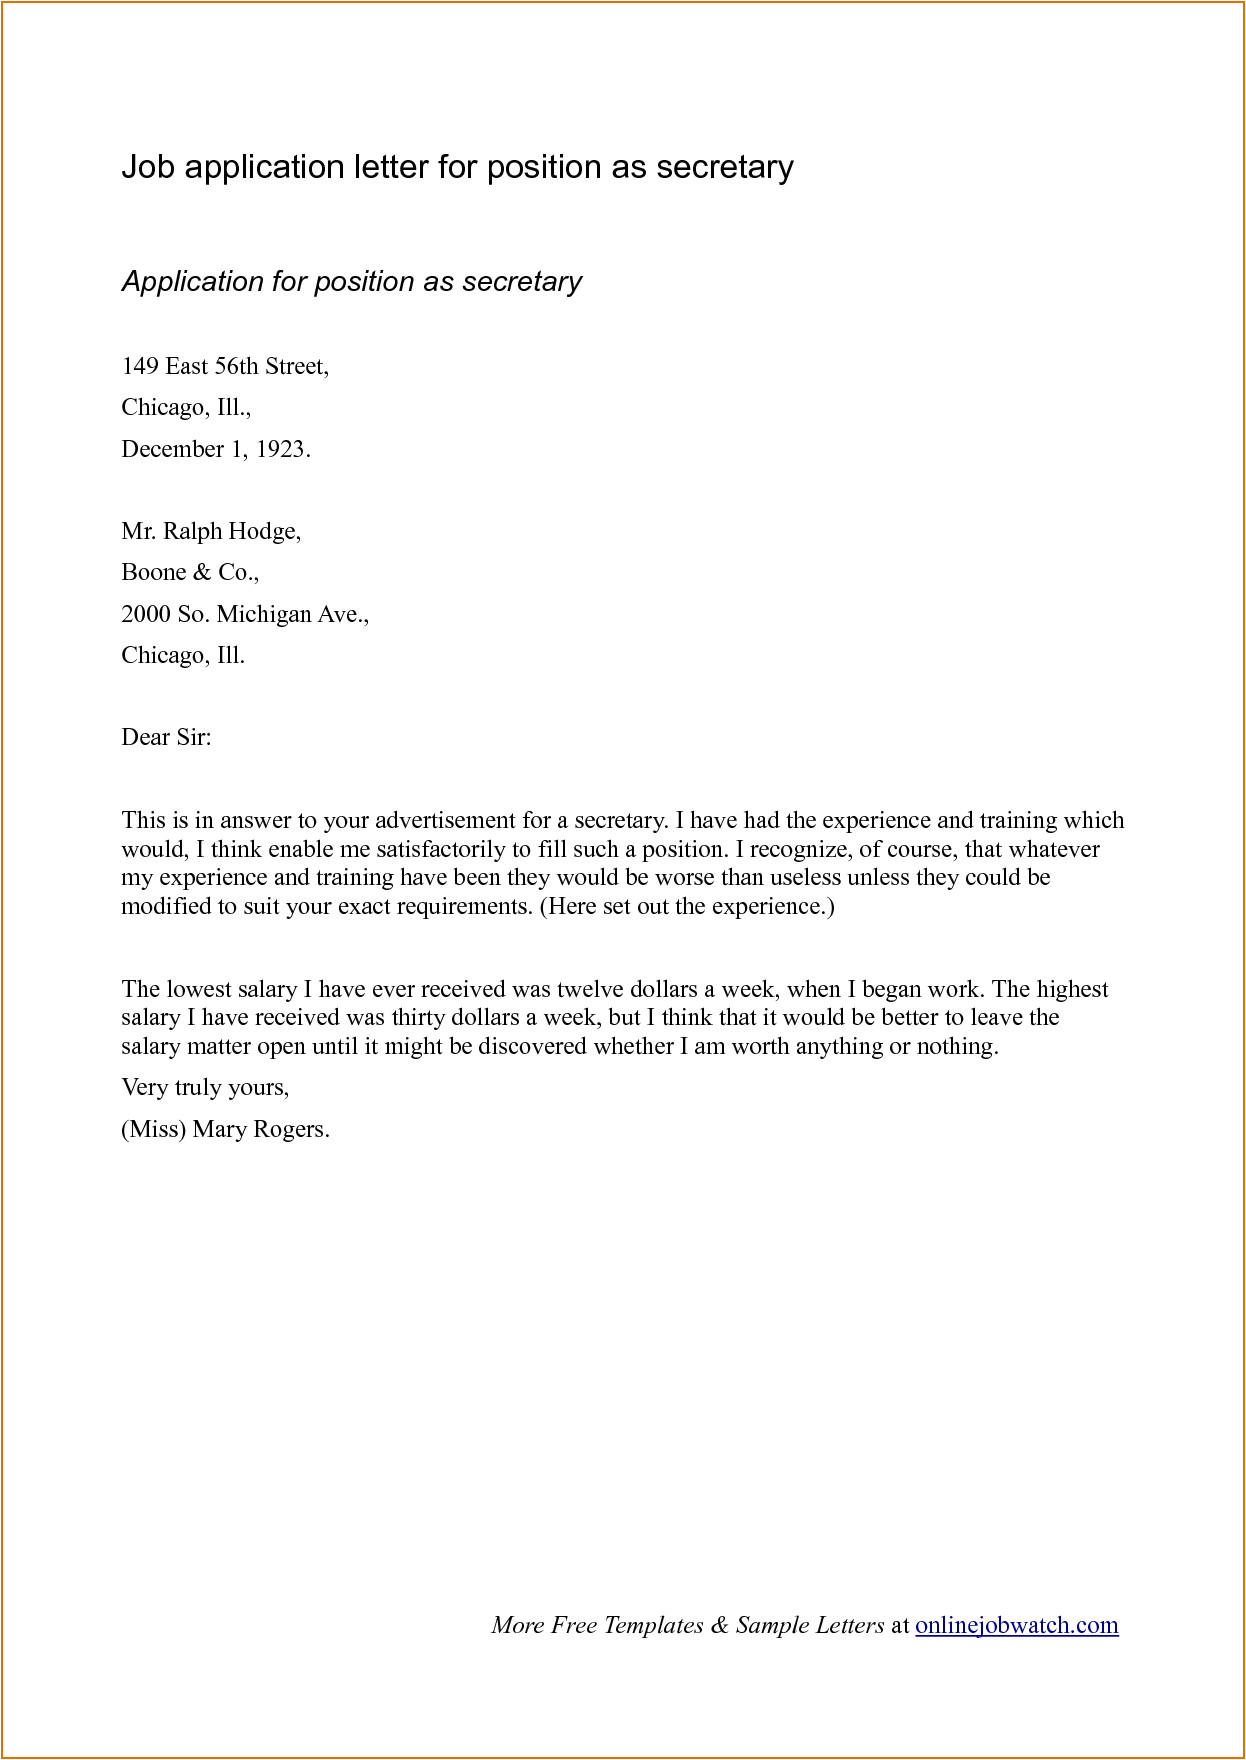 Covering Letter when Applying for A Job Sample Cover Letter format for Job Application